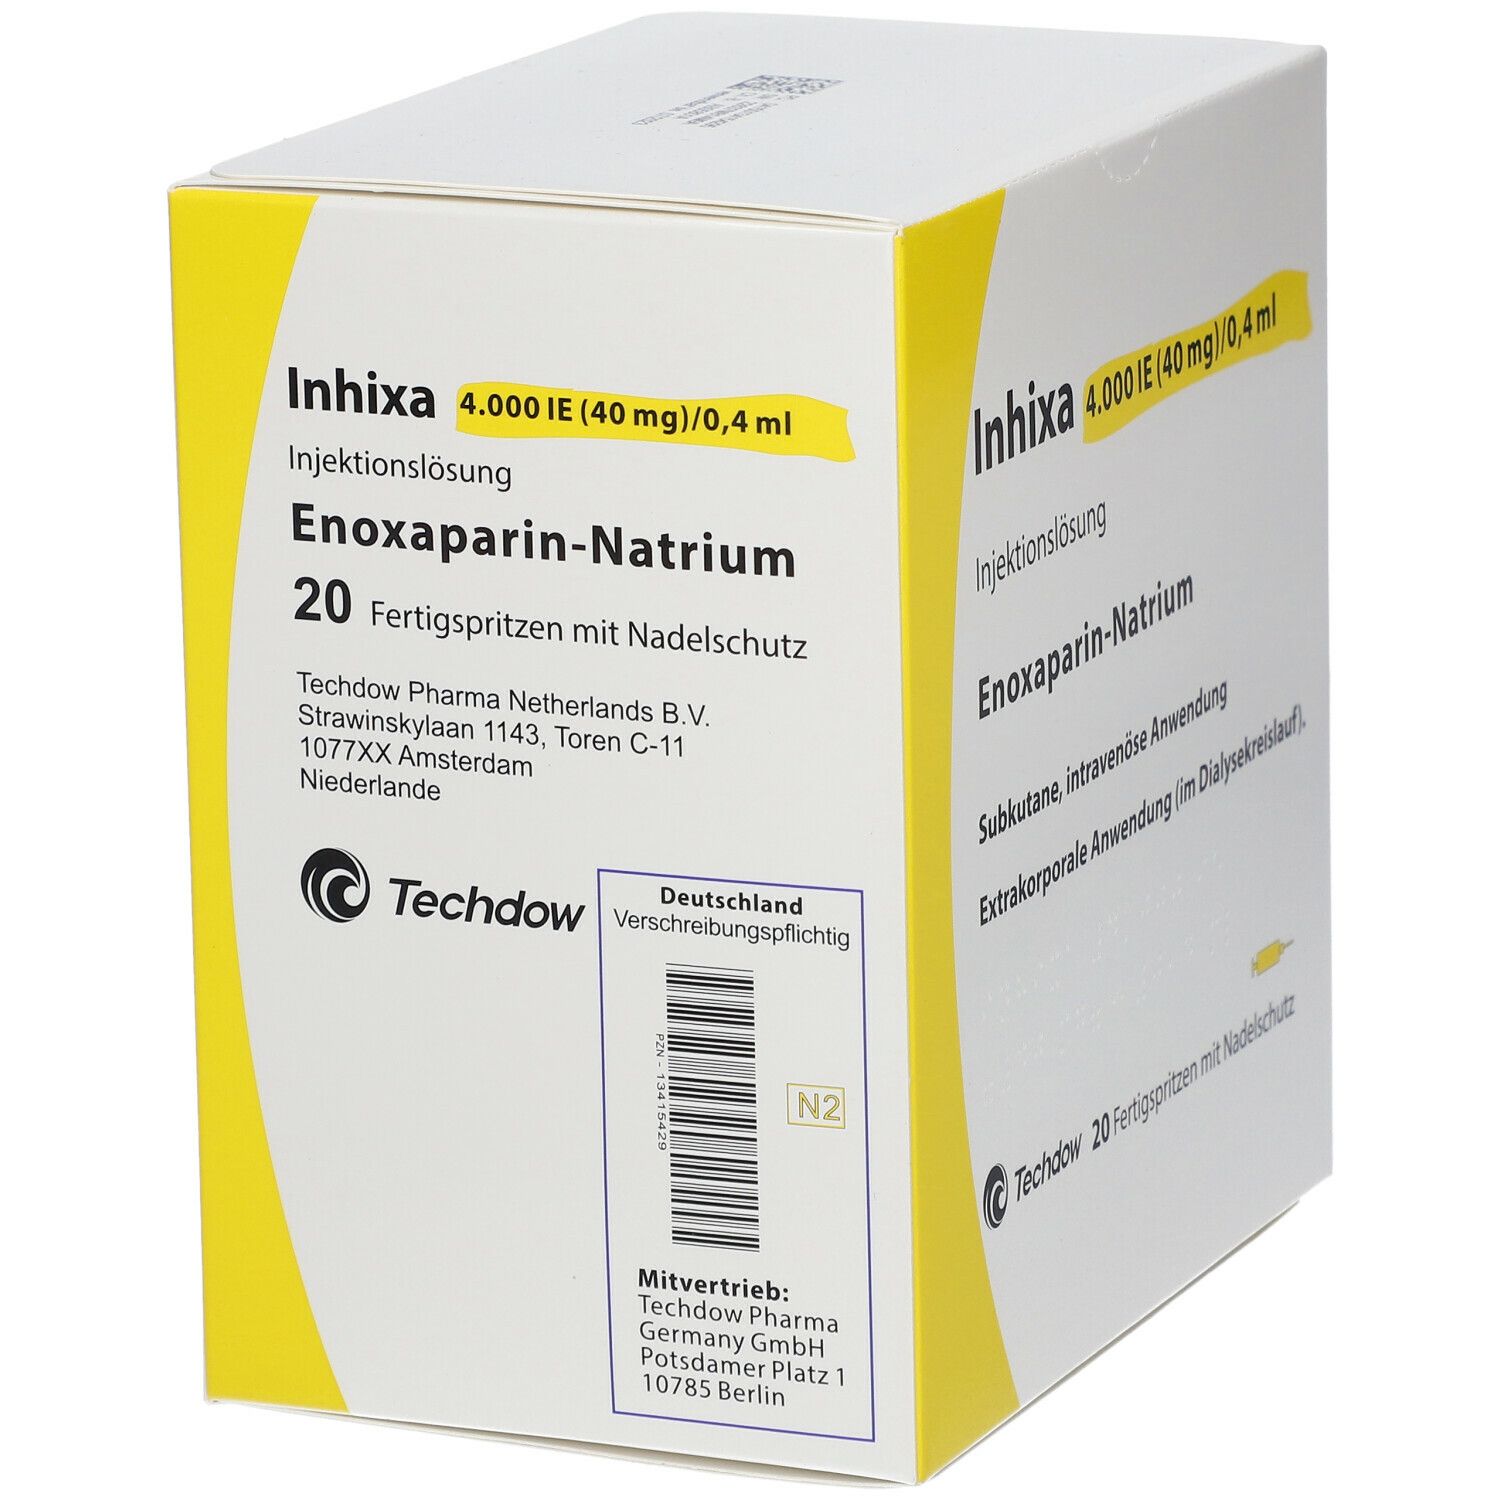 Inhixa 4.000 IE 40 mg/0,4 ml